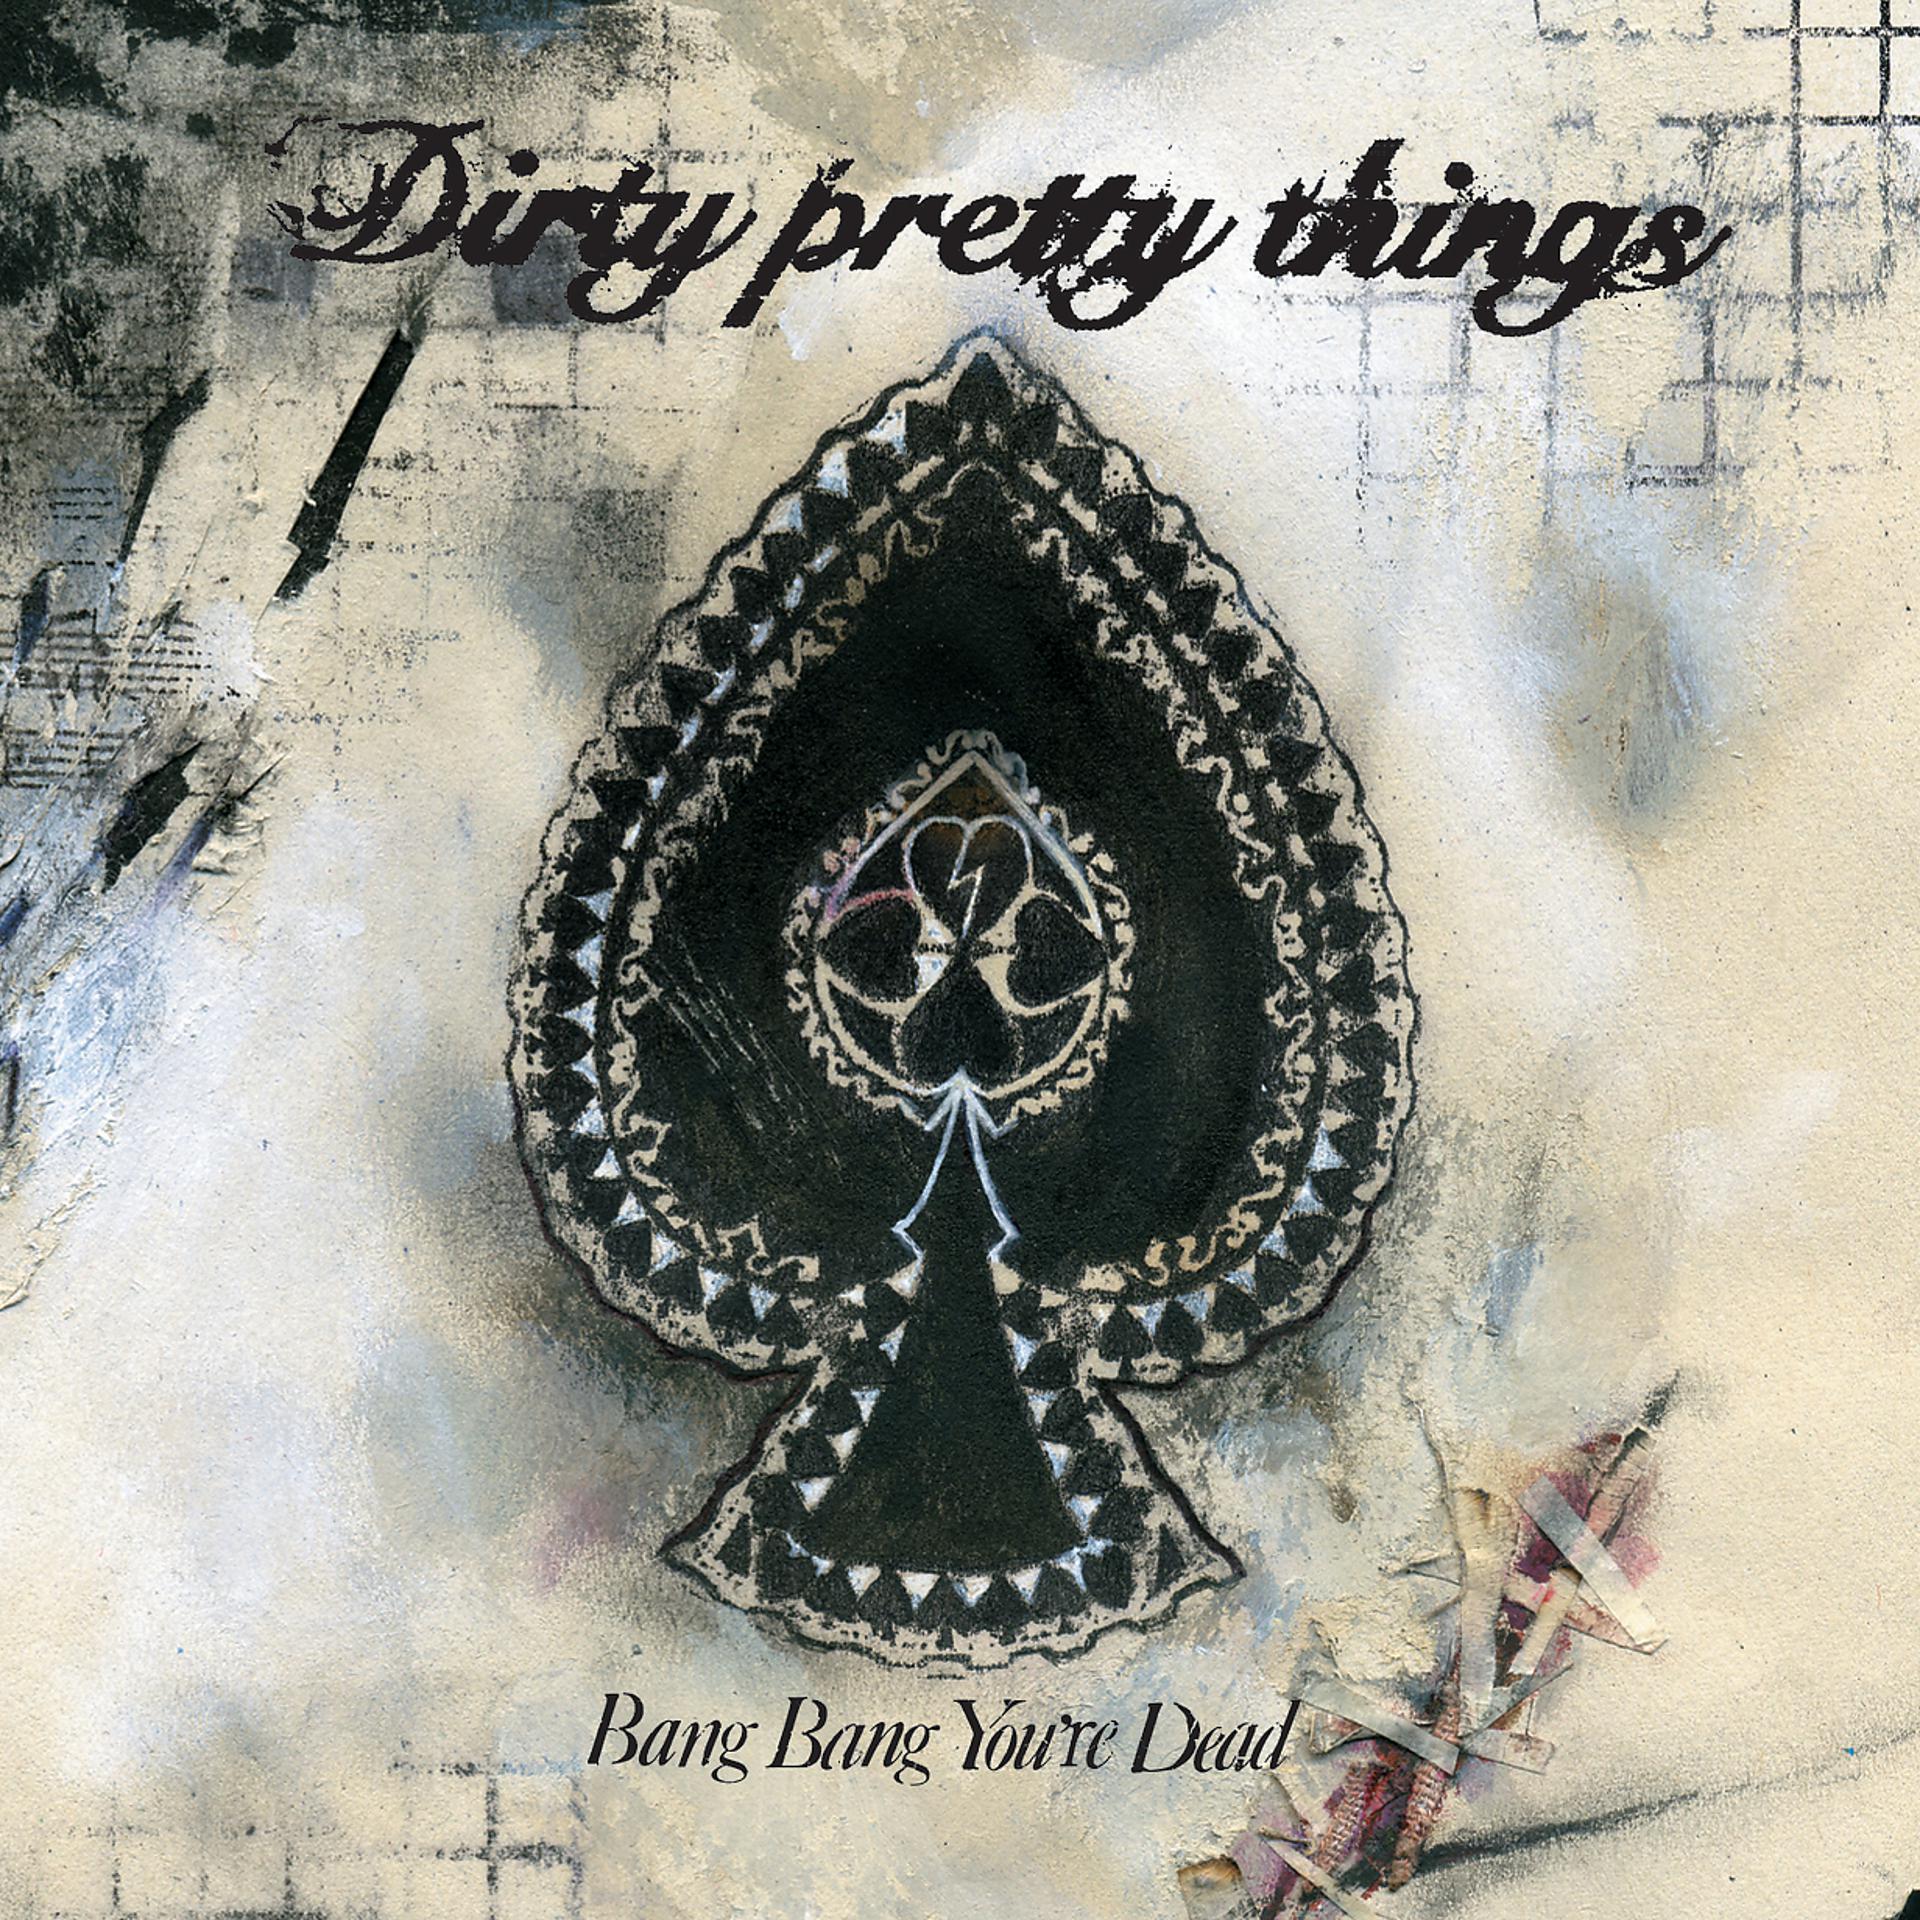 Постер к треку Dirty Pretty Things - Bang Bang You're Dead